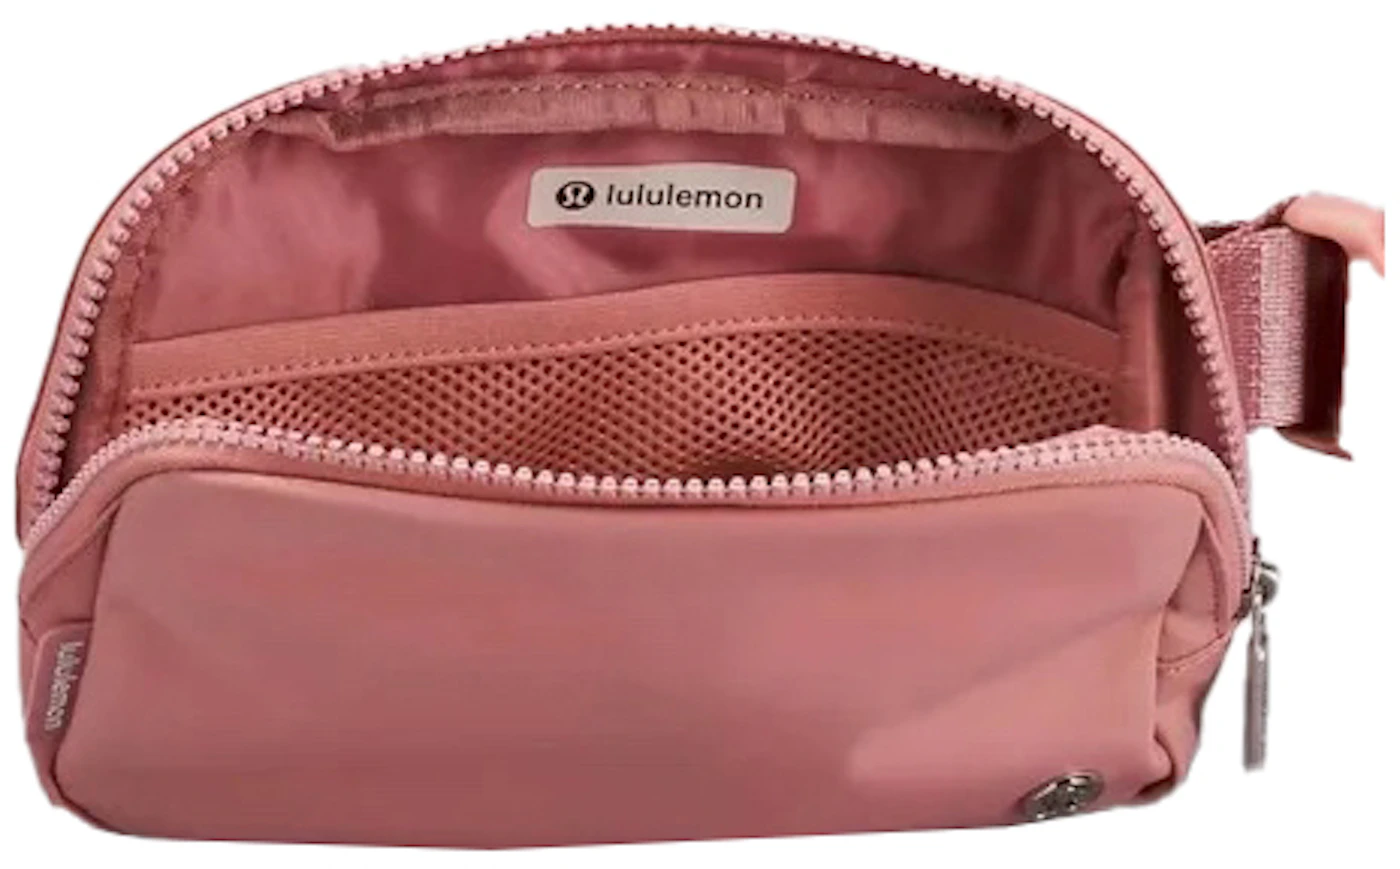 PREORDER: Lululemon Everywhere Belt Bag 1L, Women's Fashion, Bags &  Wallets, Cross-body Bags on Carousell